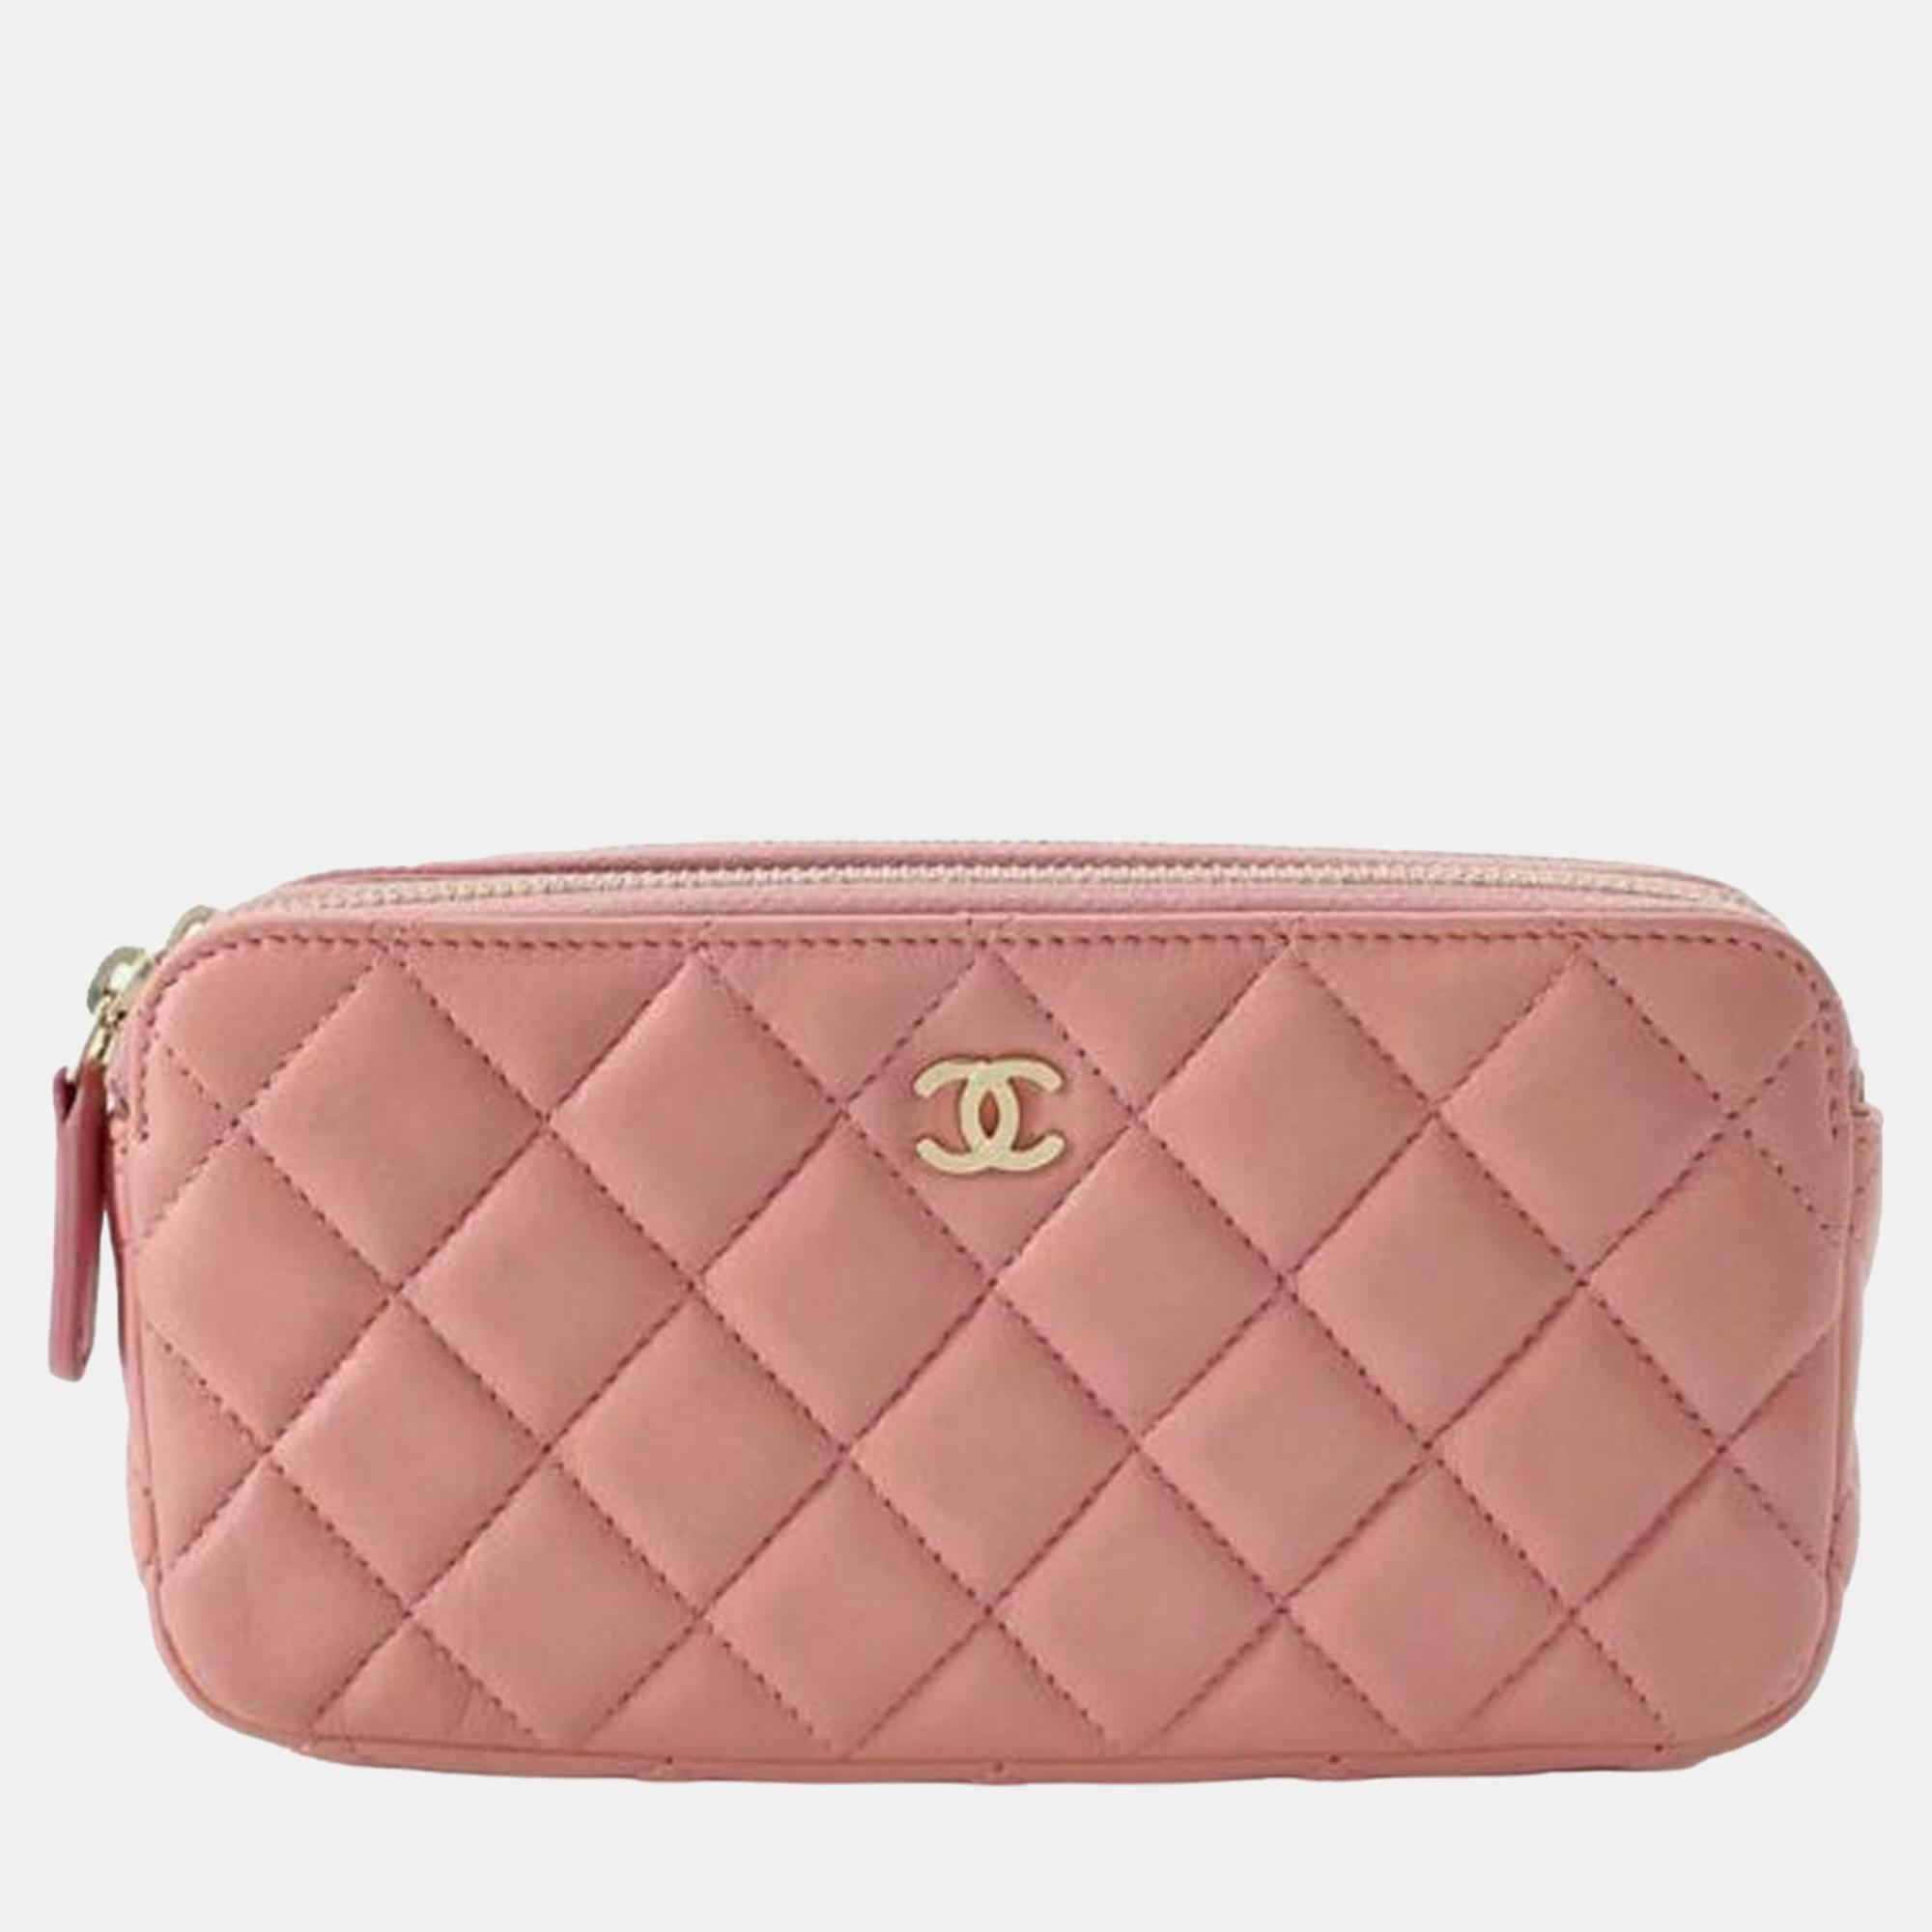 Chanel pink cc lambskin double zip wallet on chain